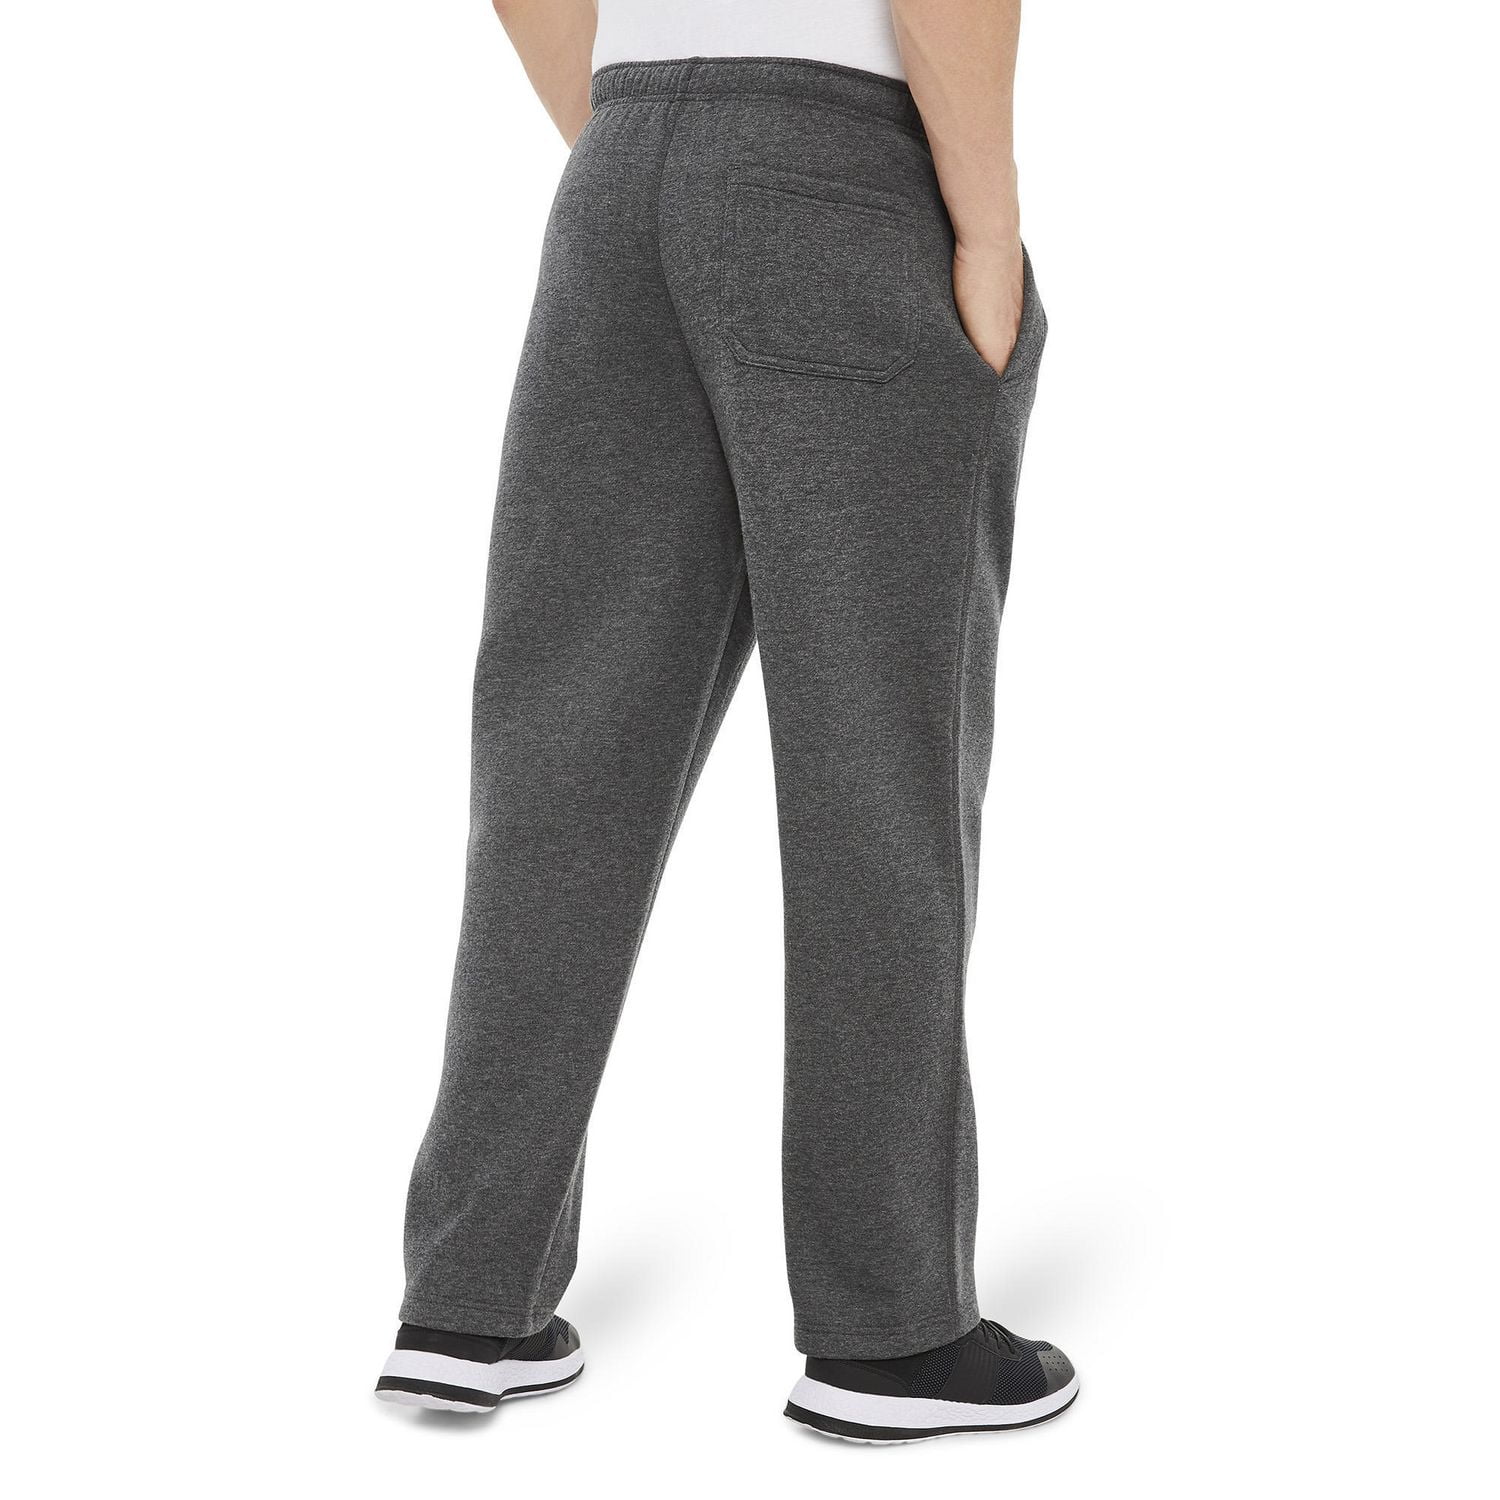 Athletic Works Men's Open Bottom Fleece Pants, Sizes S-2XL 